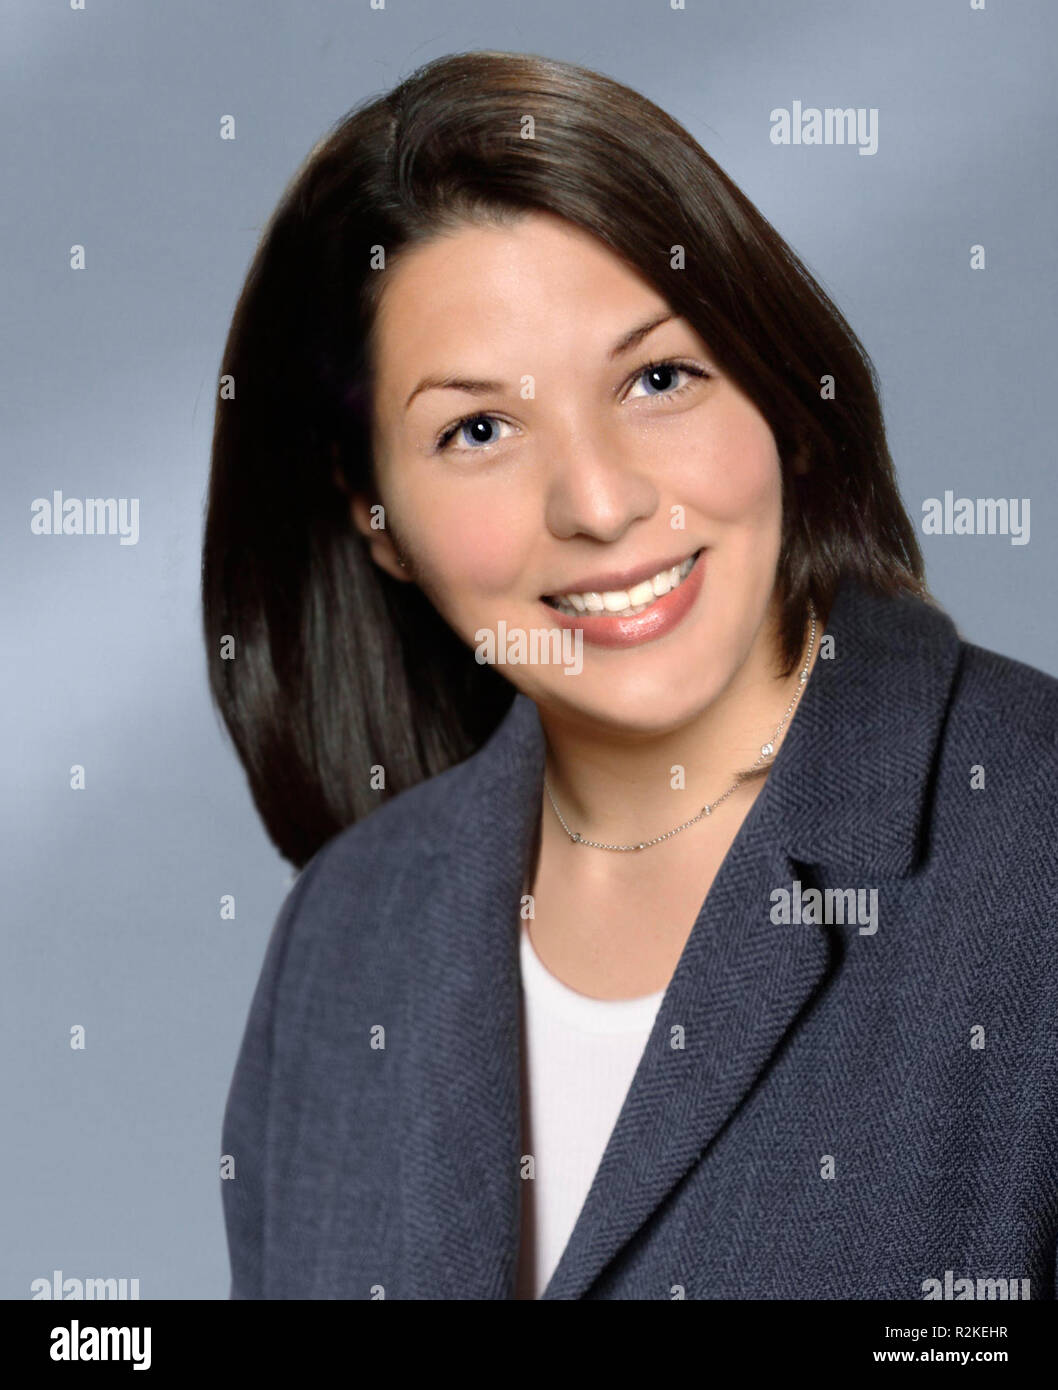 smiling businesswoman Stock Photo